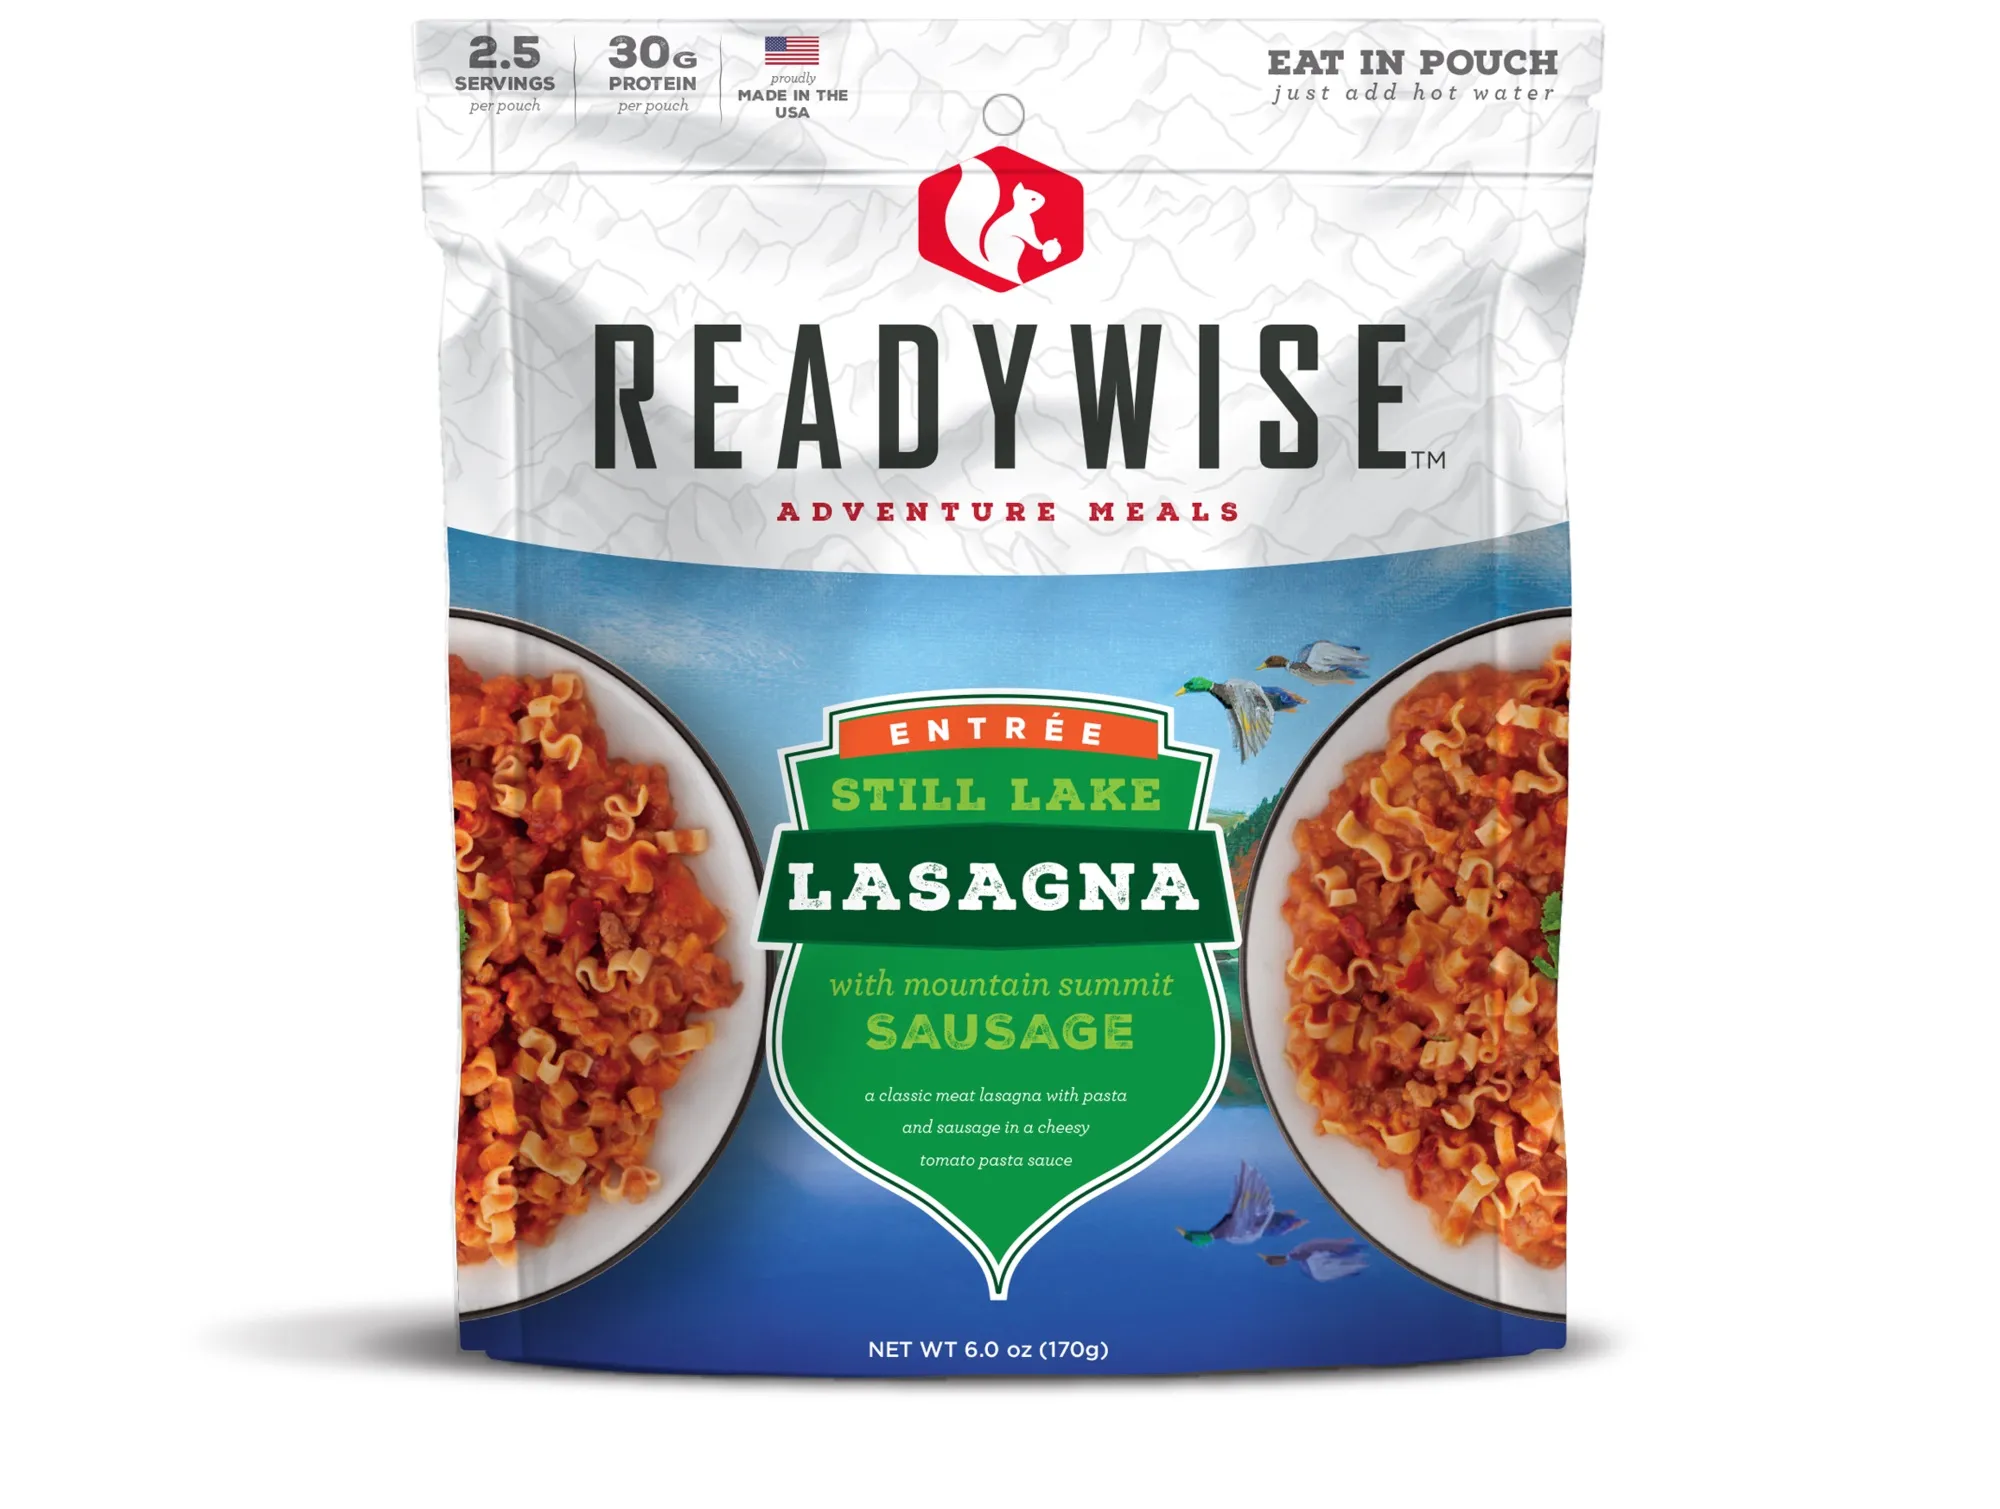 Ready Wise - RW05-005 - Still Lake Lasagna With Sausage